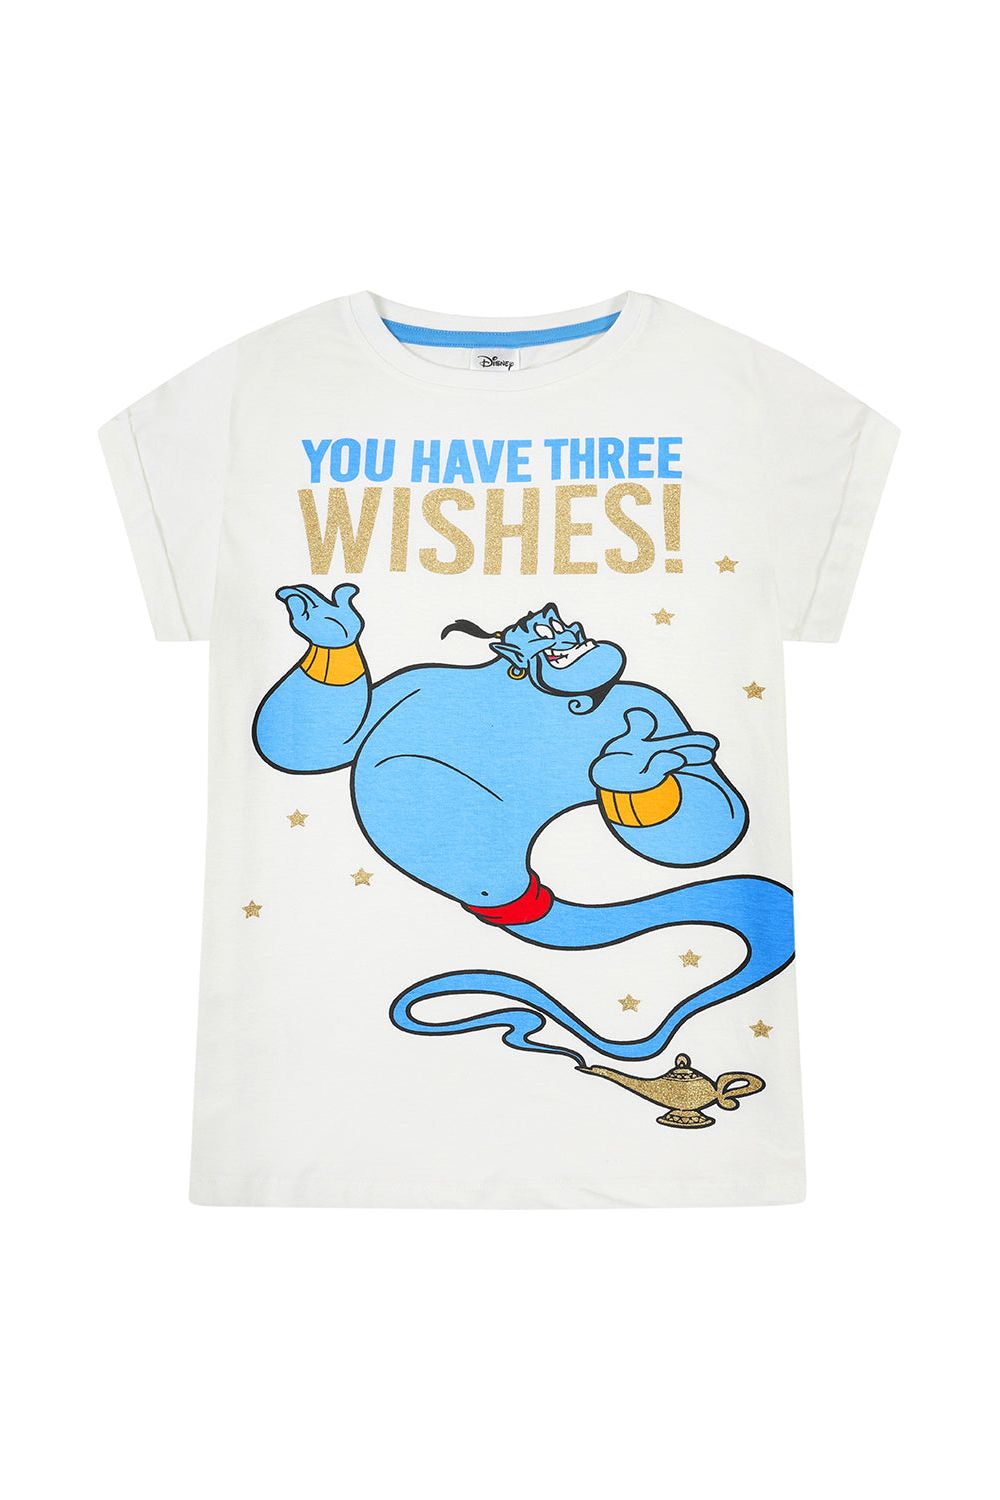 Ladies Disney Aladdin Genie 'You Have Three Wishes' Long Pyjamas - Pyjamas.com